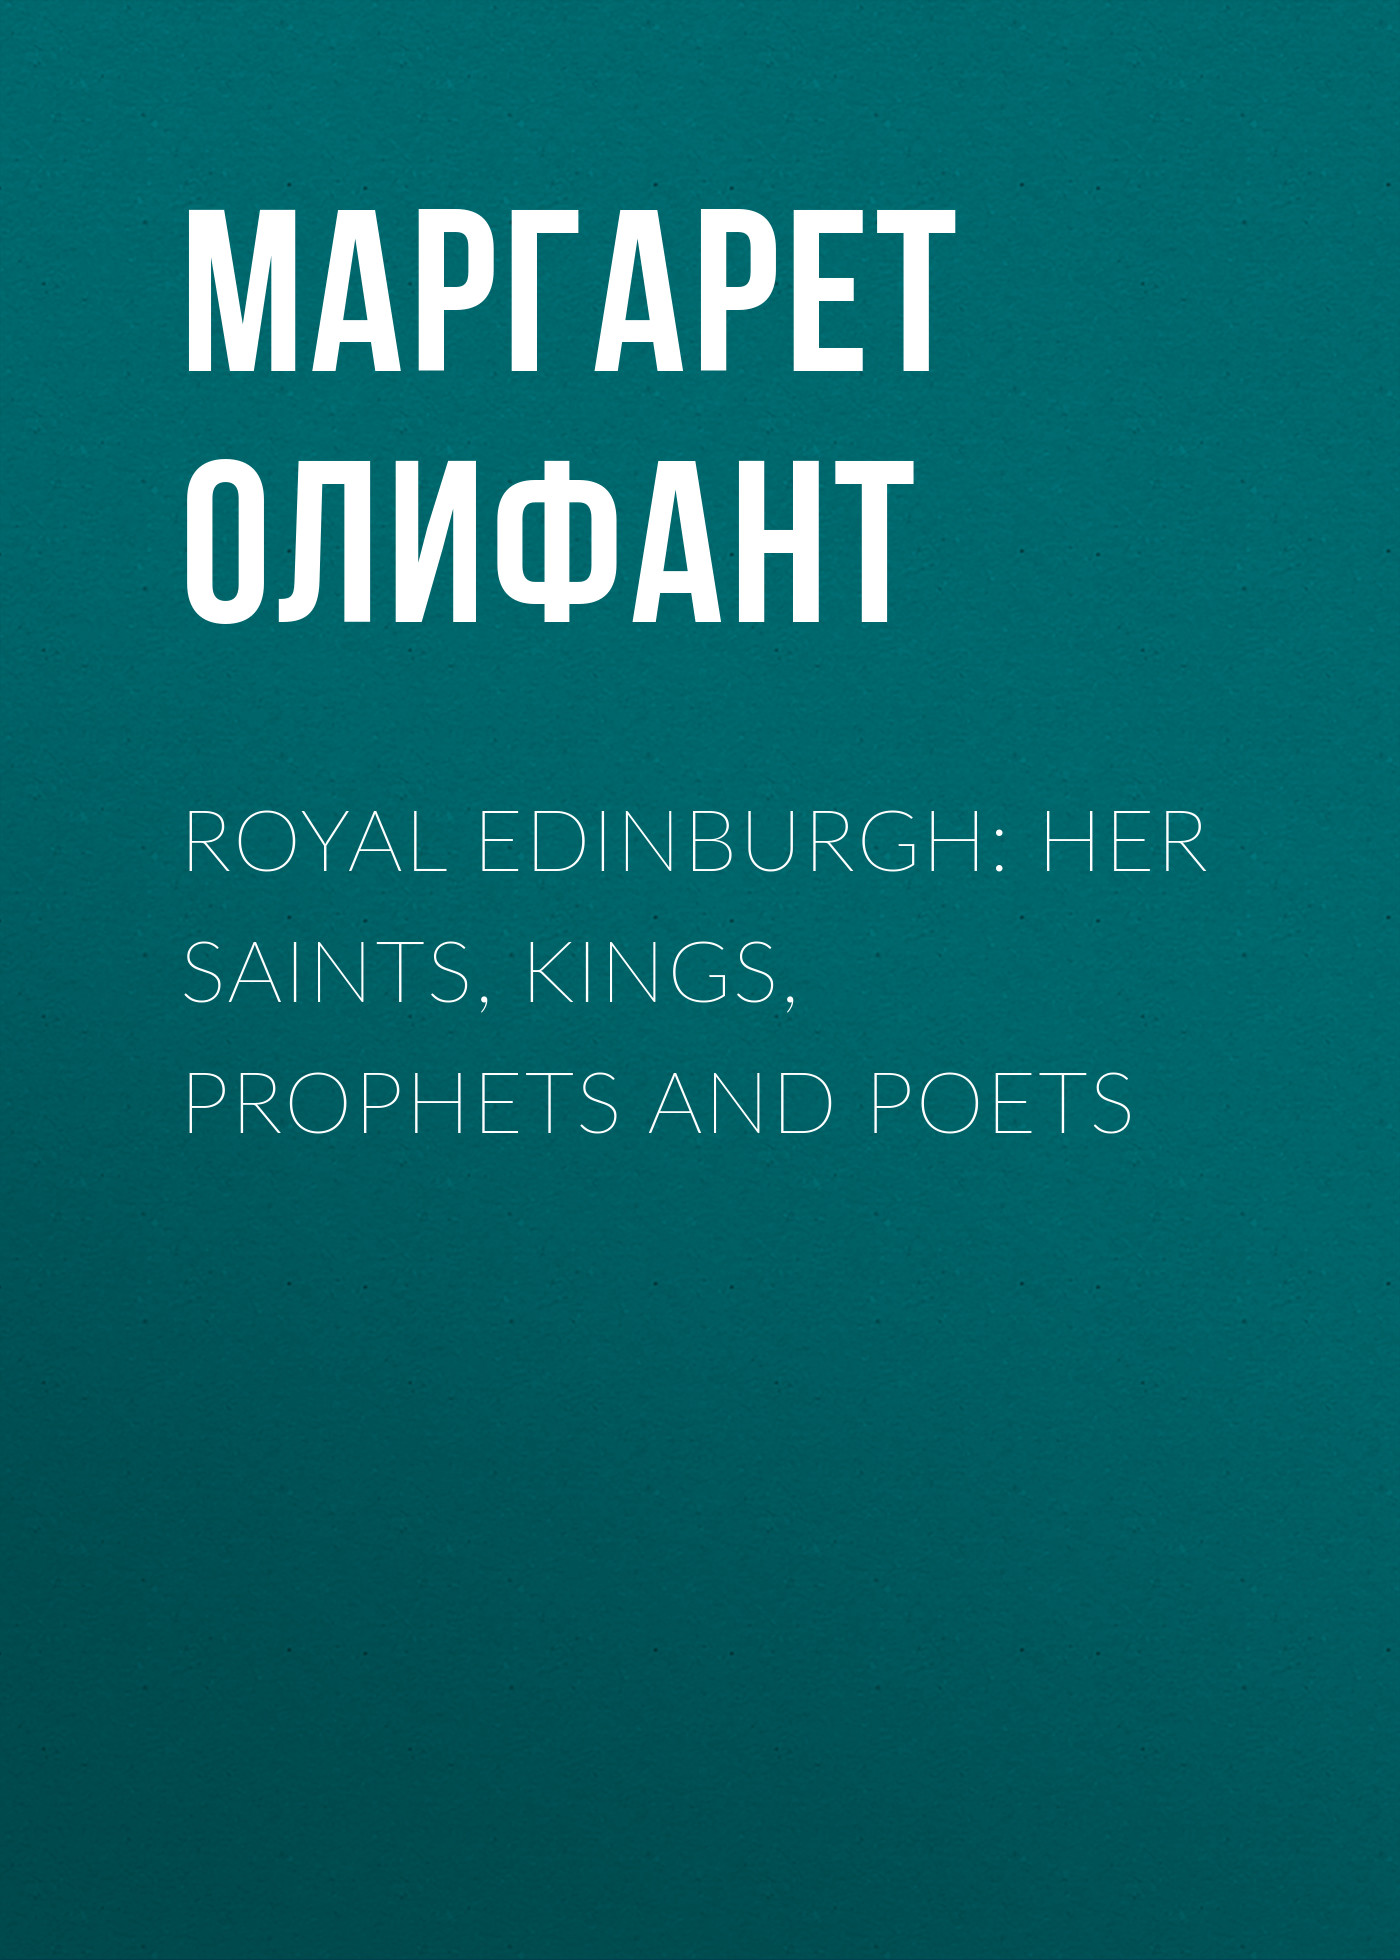 Royal Edinburgh: Her Saints, Kings, Prophets and Poets